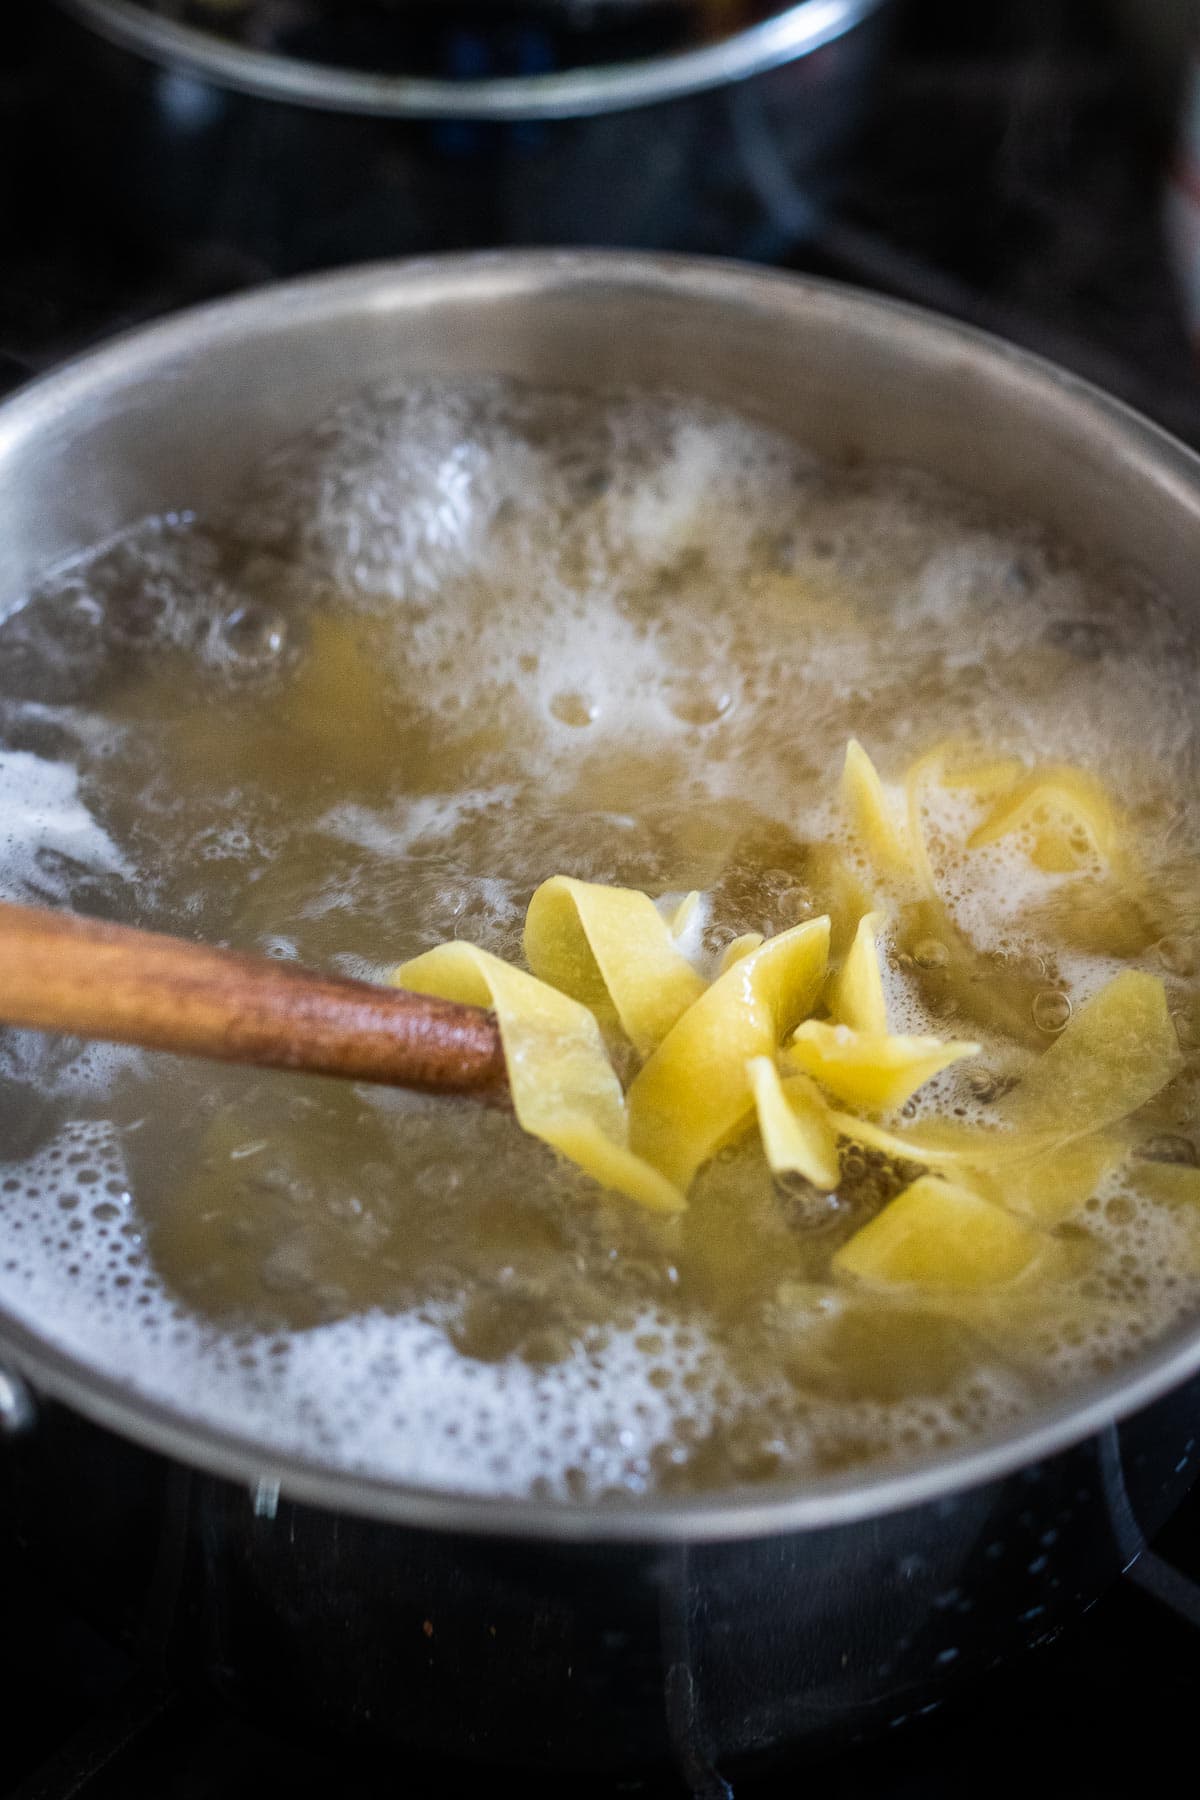 boiling pasta. 